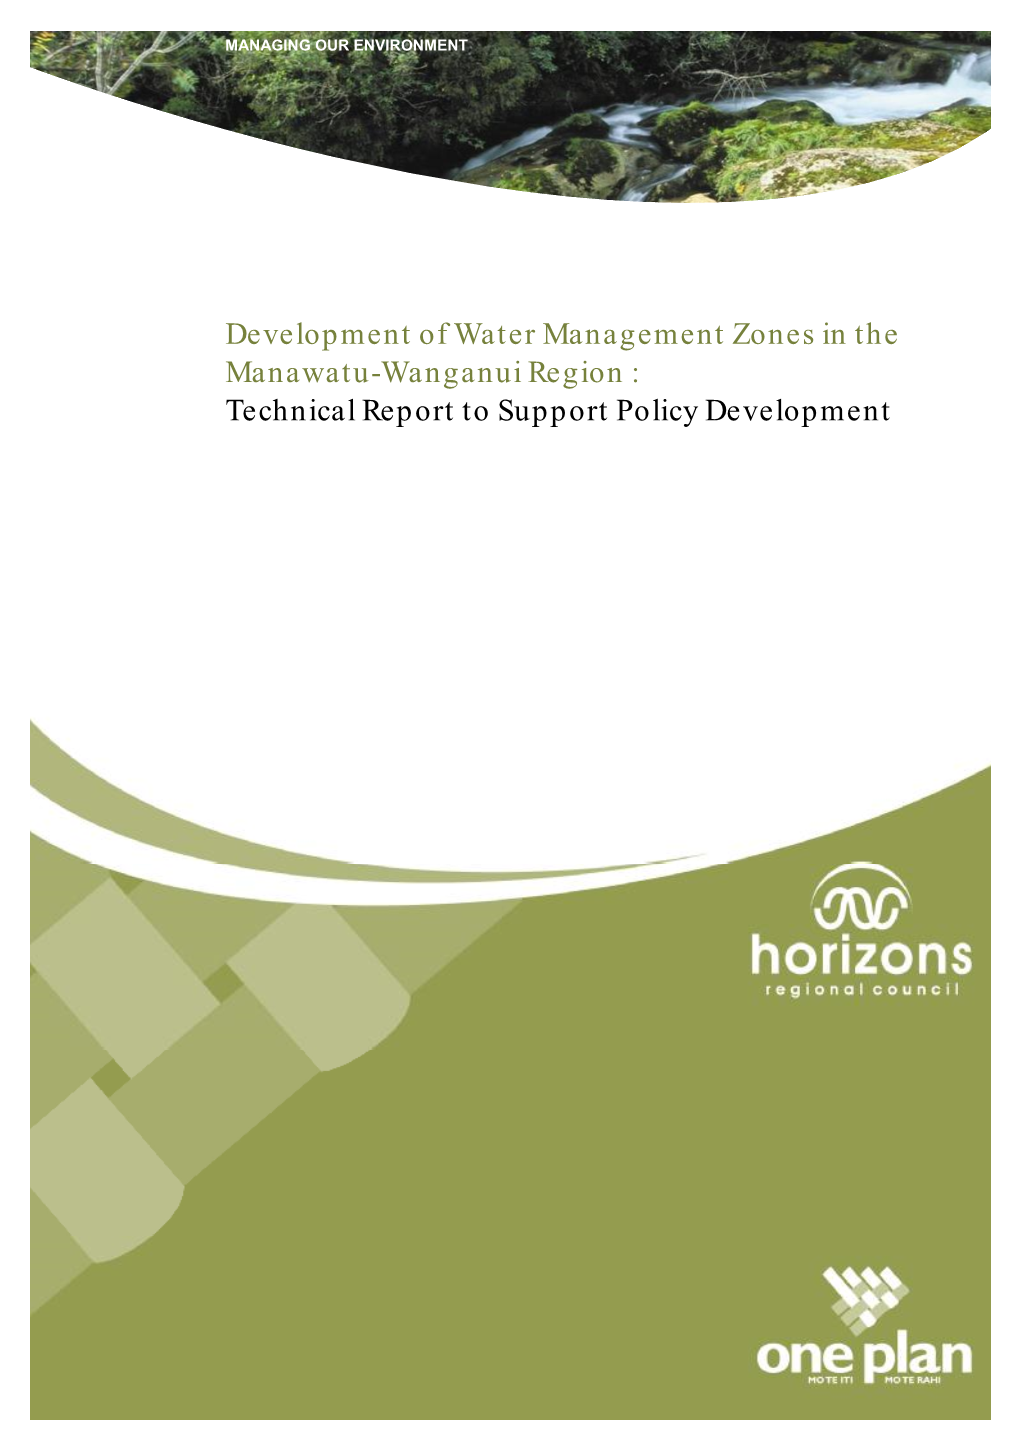 Development of Water Management Zones in the Manawatu-Wanganui Region